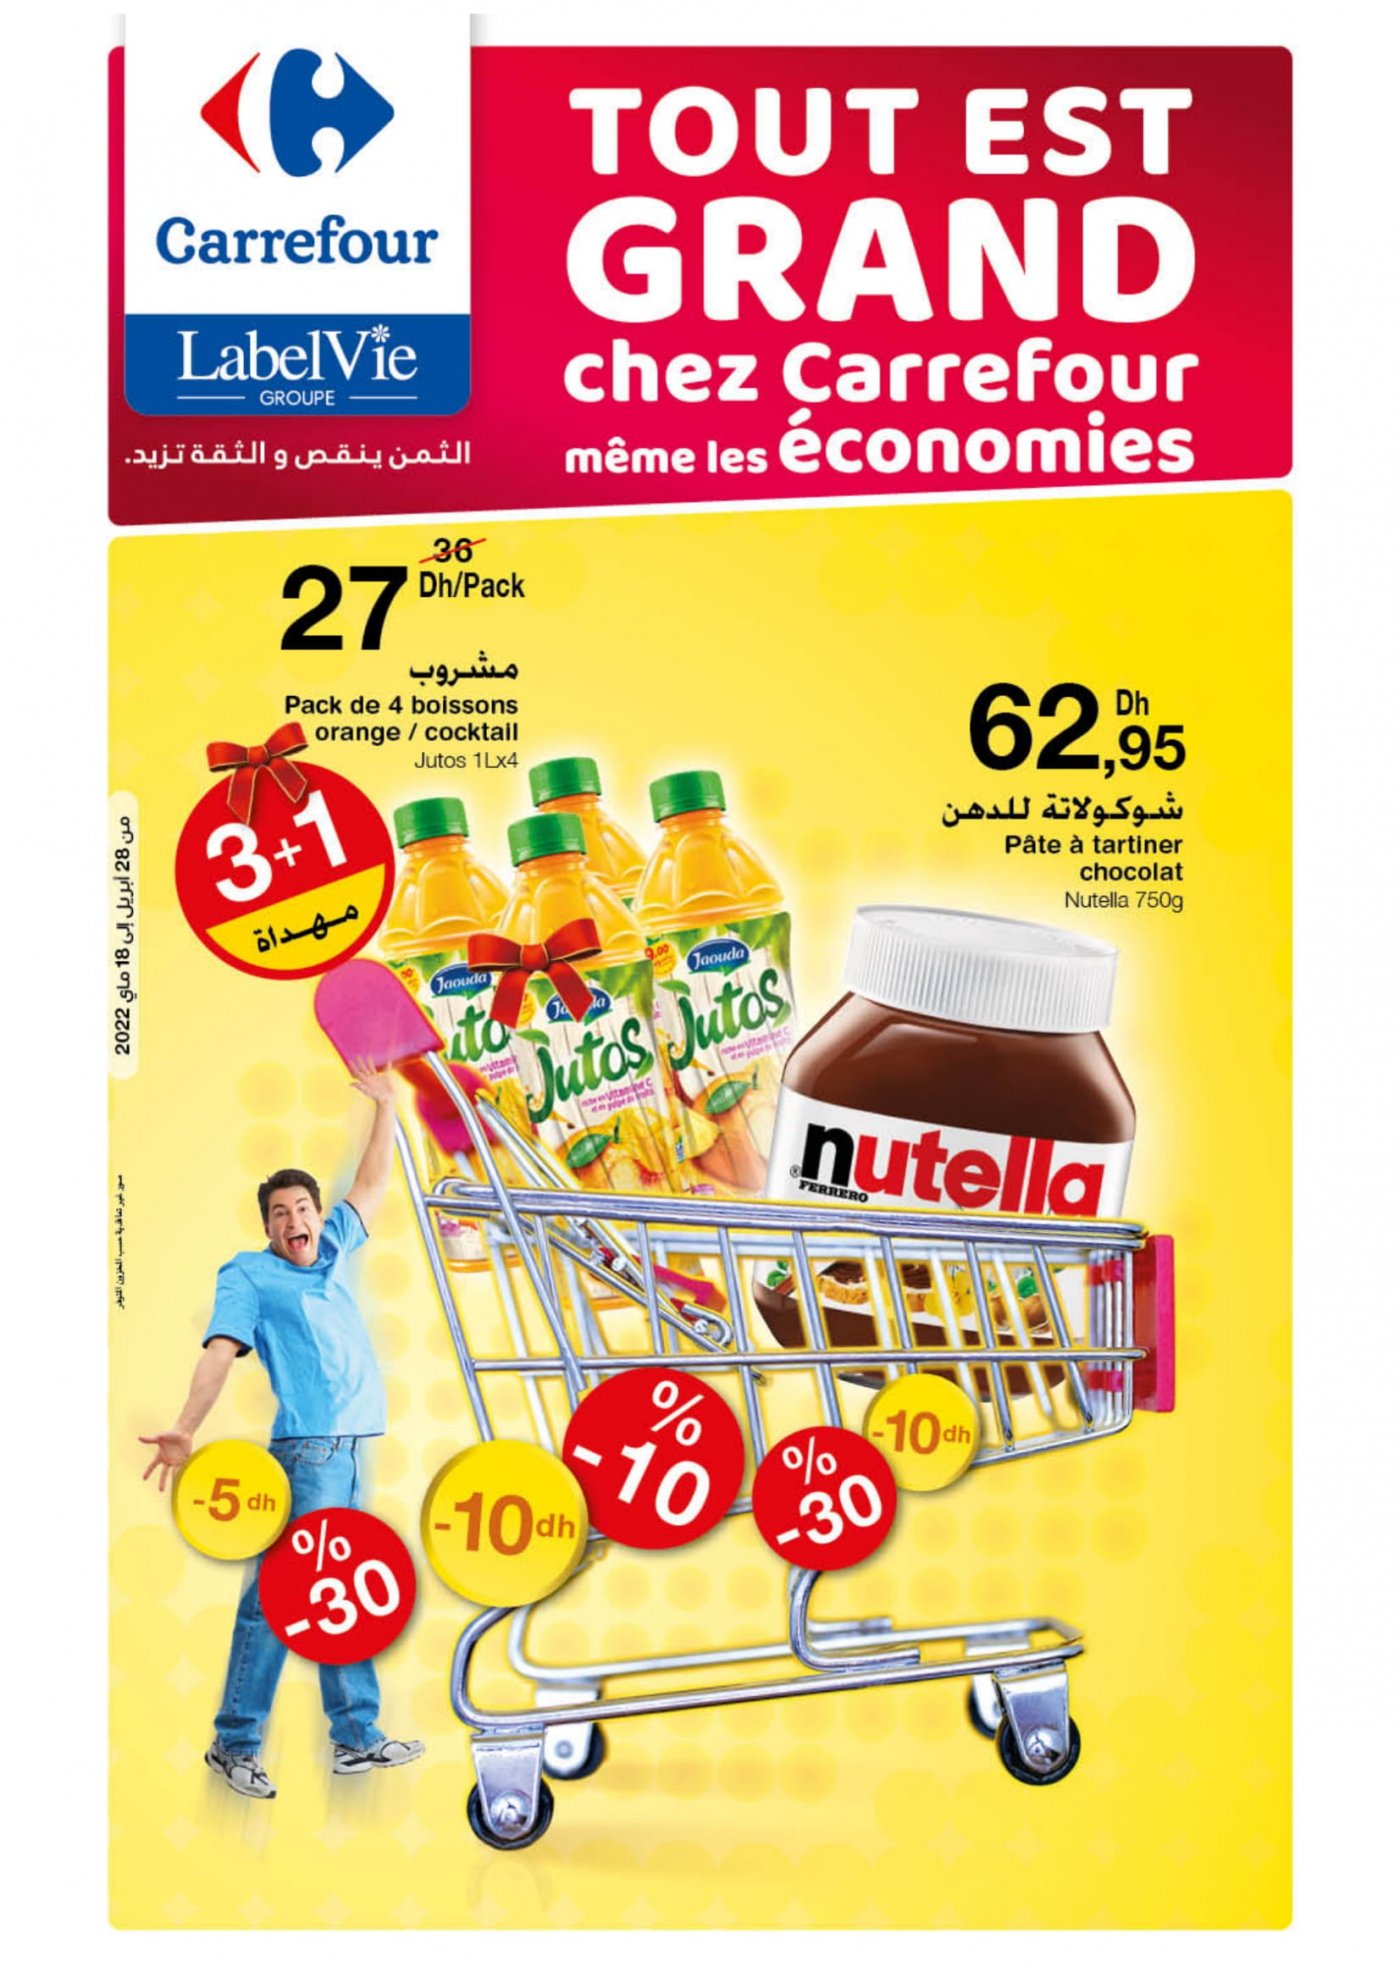 Catalogue Carrefour Mai 2022 spécial Grandes économies octobre 2023